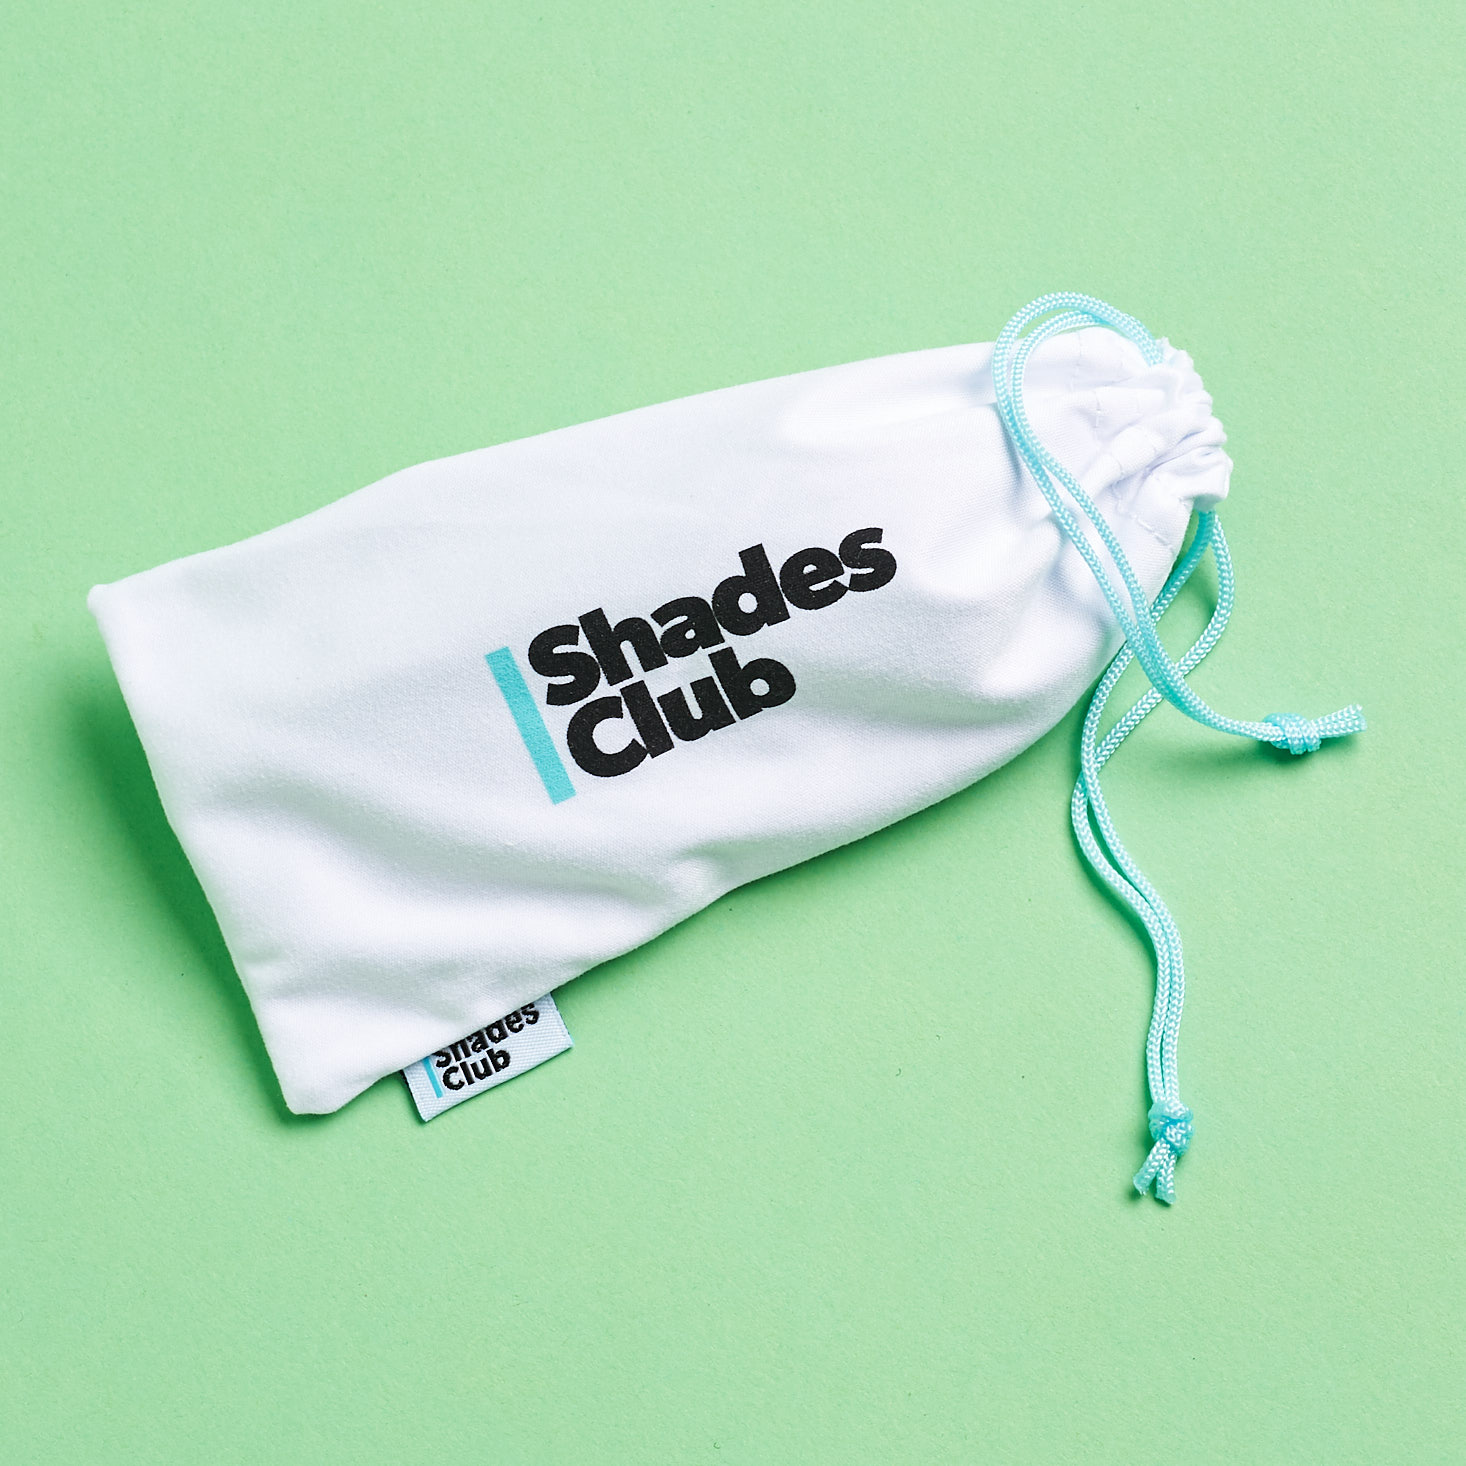 shades club pouch